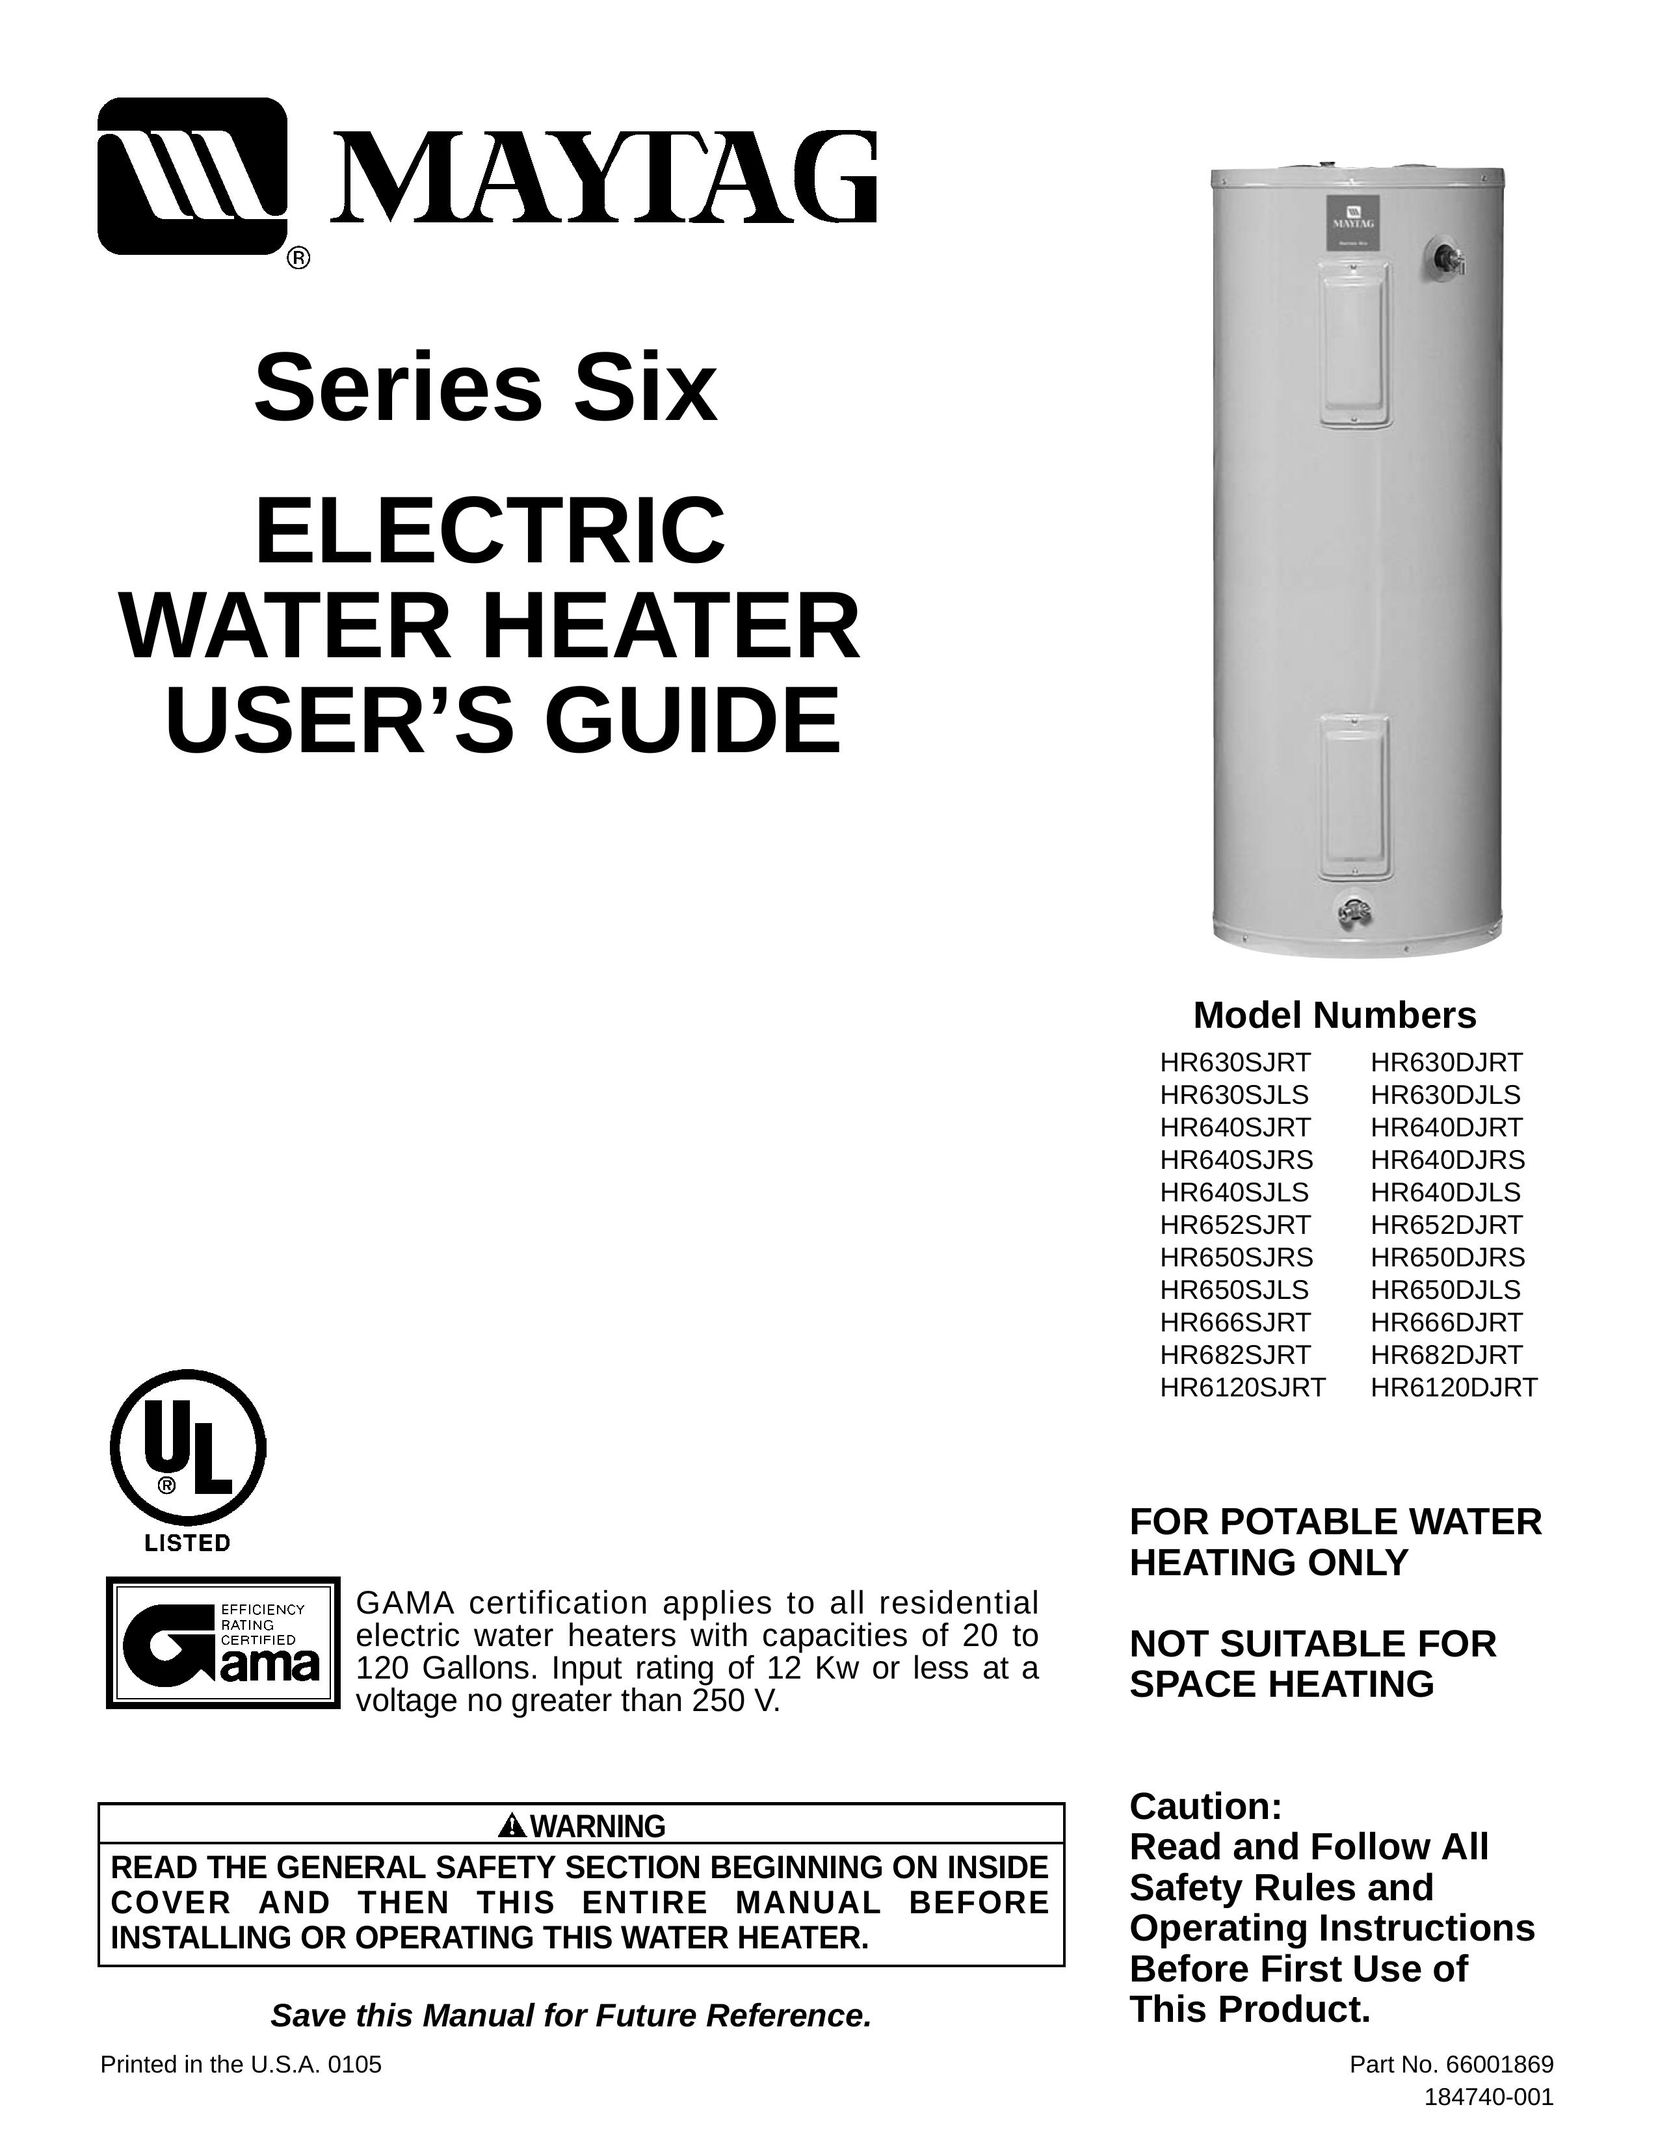 Maytag HR640DJRS Water Heater User Manual